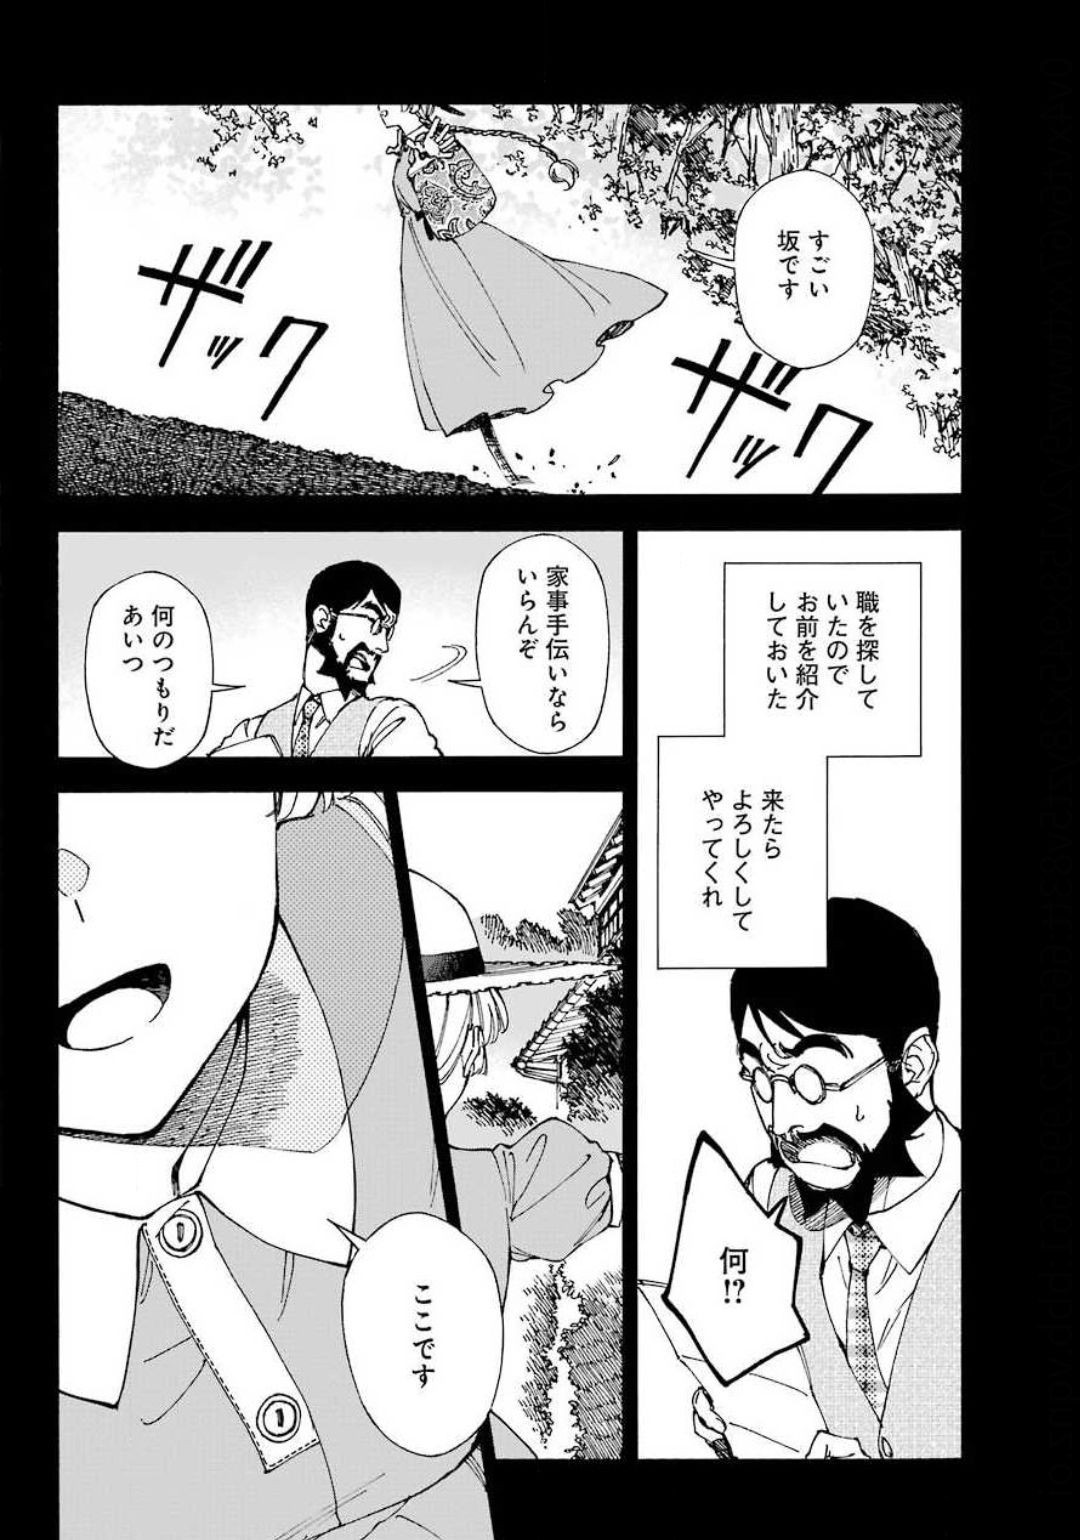 Hotomeku-kakashi - Chapter 07-1 - Page 6